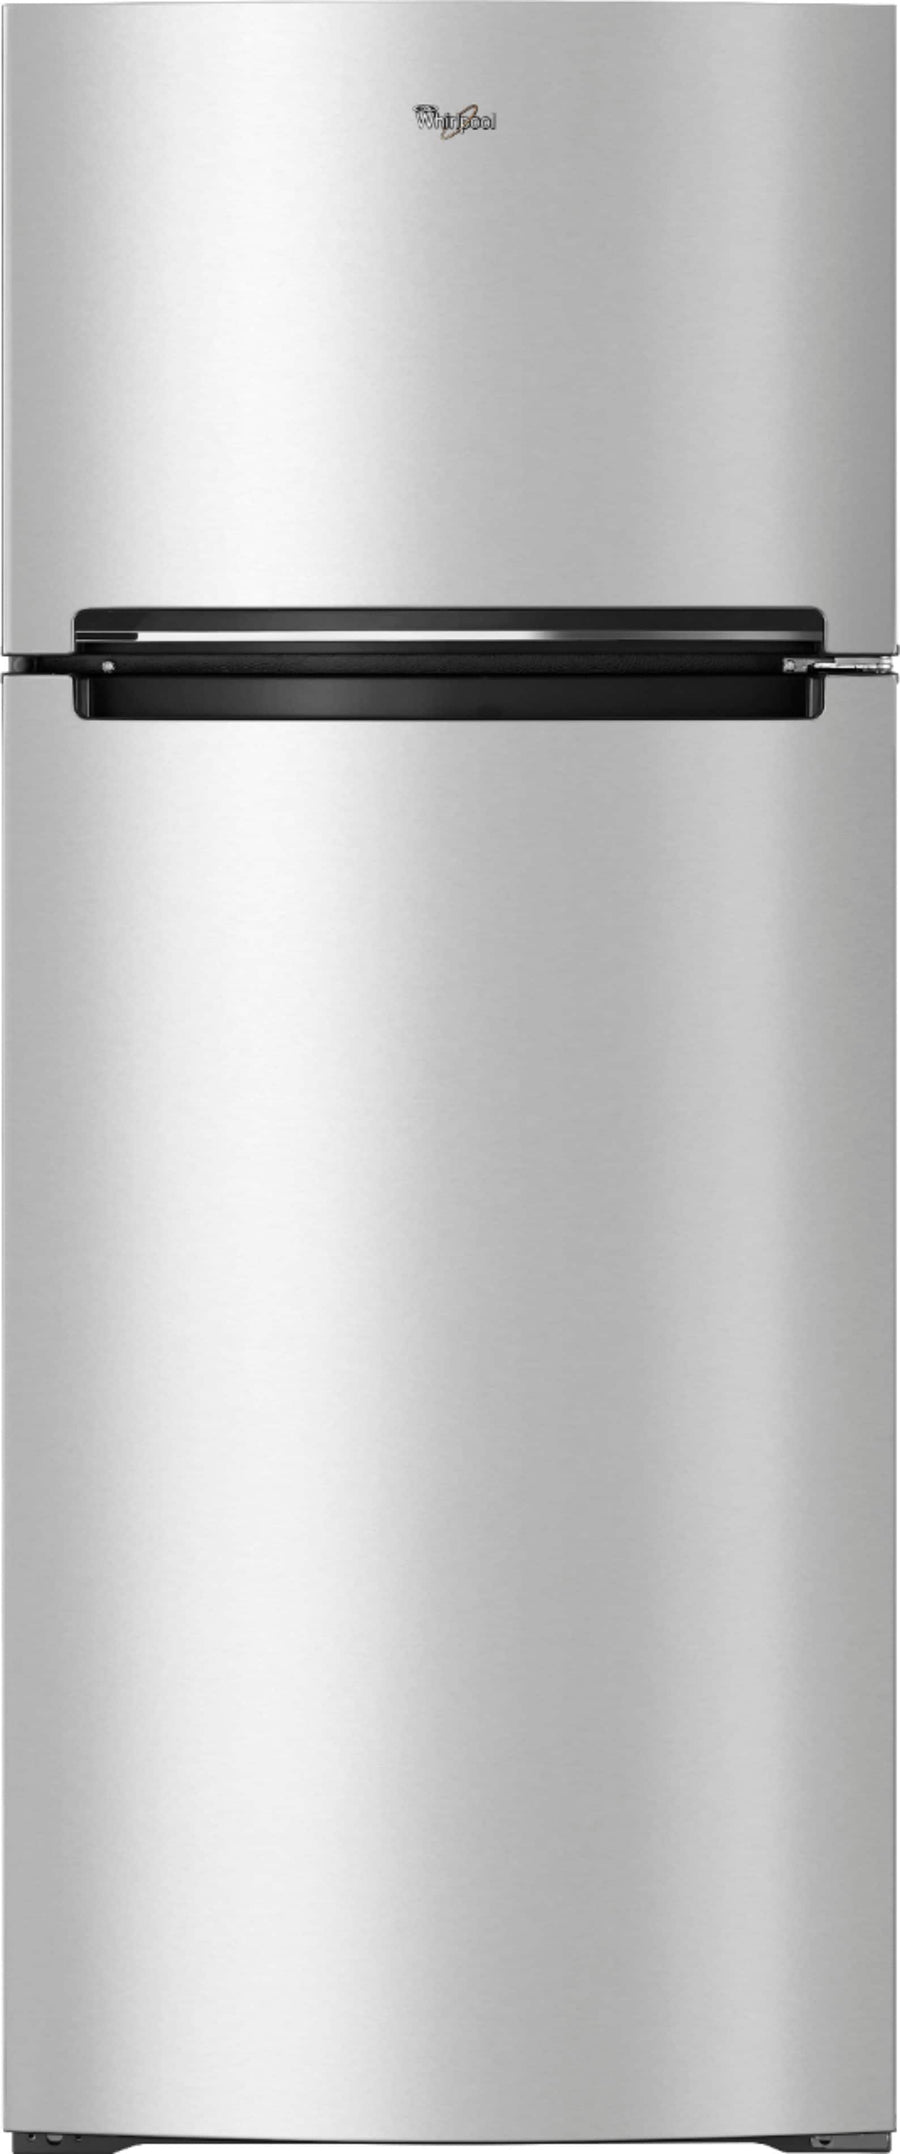 Whirlpool - 17.7 Cu. Ft. Top-Freezer Refrigerator - Monochromatic stainless steel_0